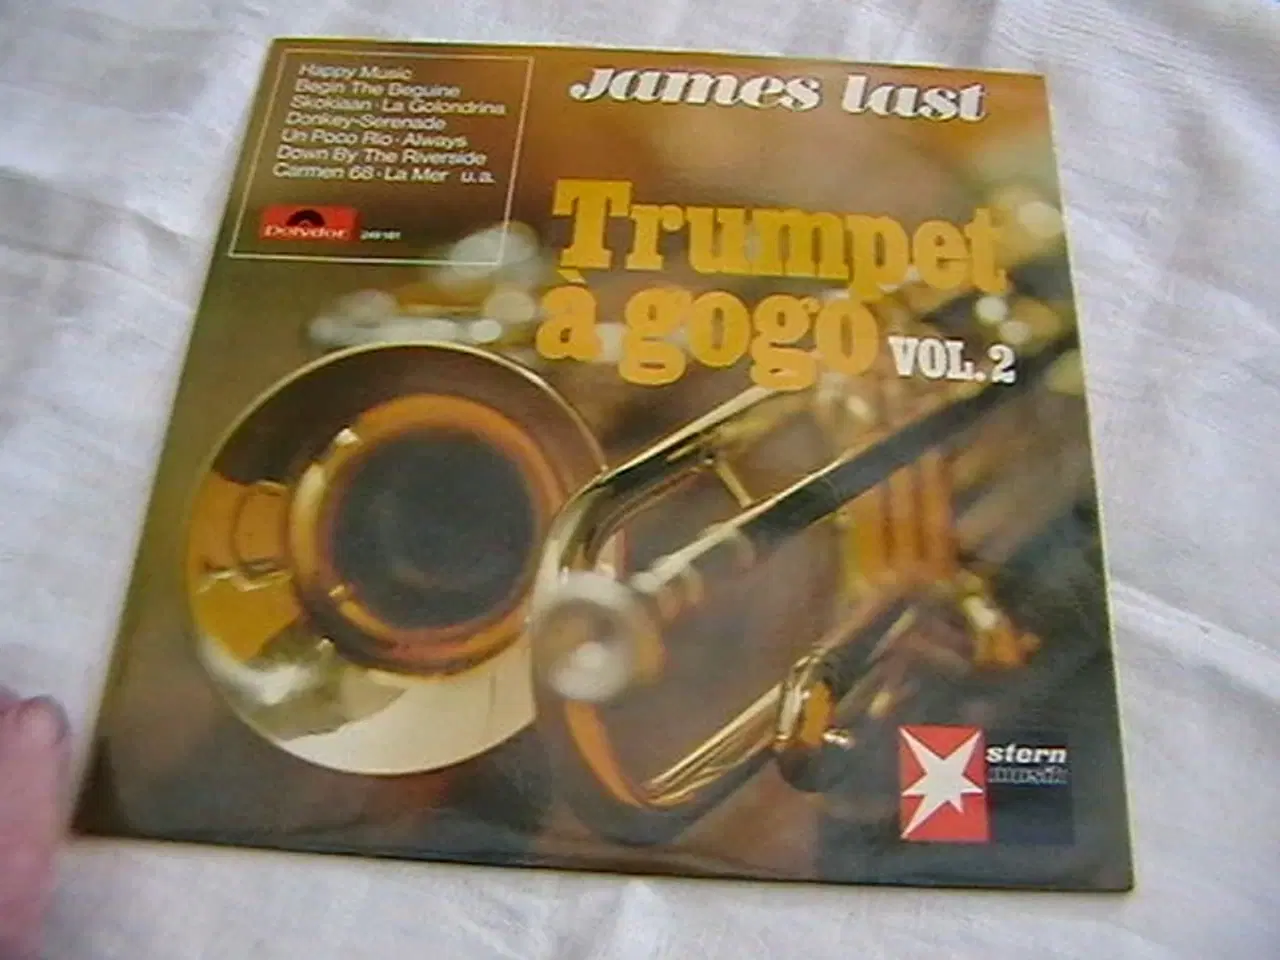 Billede 1 - LP: James Last. Trompet a` gogo.